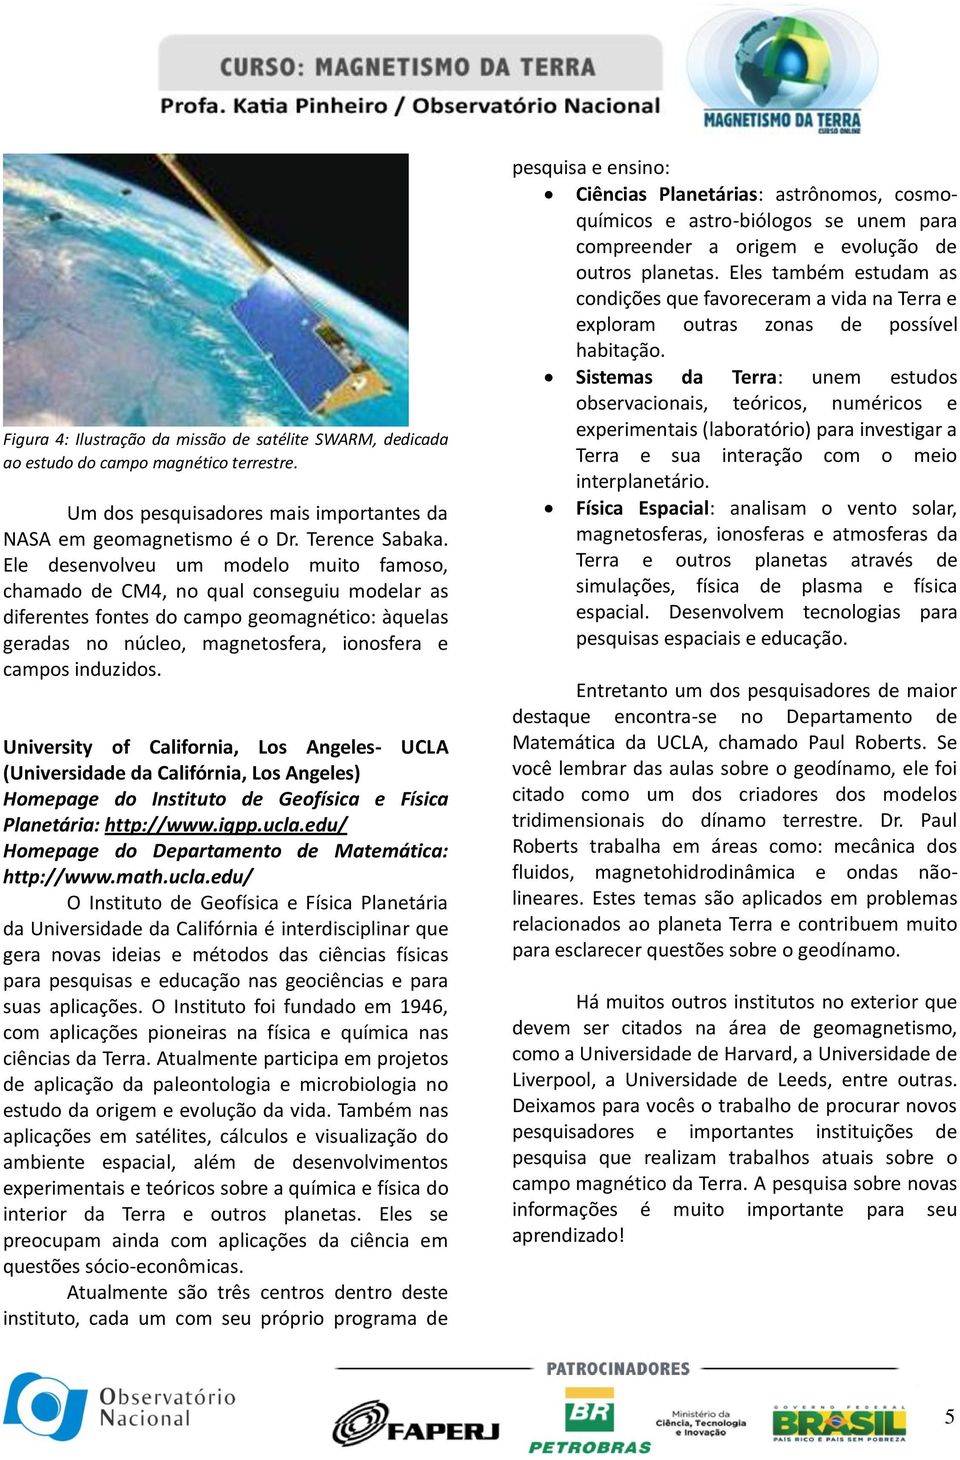 University of California, Los Angeles- UCLA (Universidade da Califórnia, Los Angeles) Homepage do Instituto de Geofísica e Física Planetária: http://www.igpp.ucla.